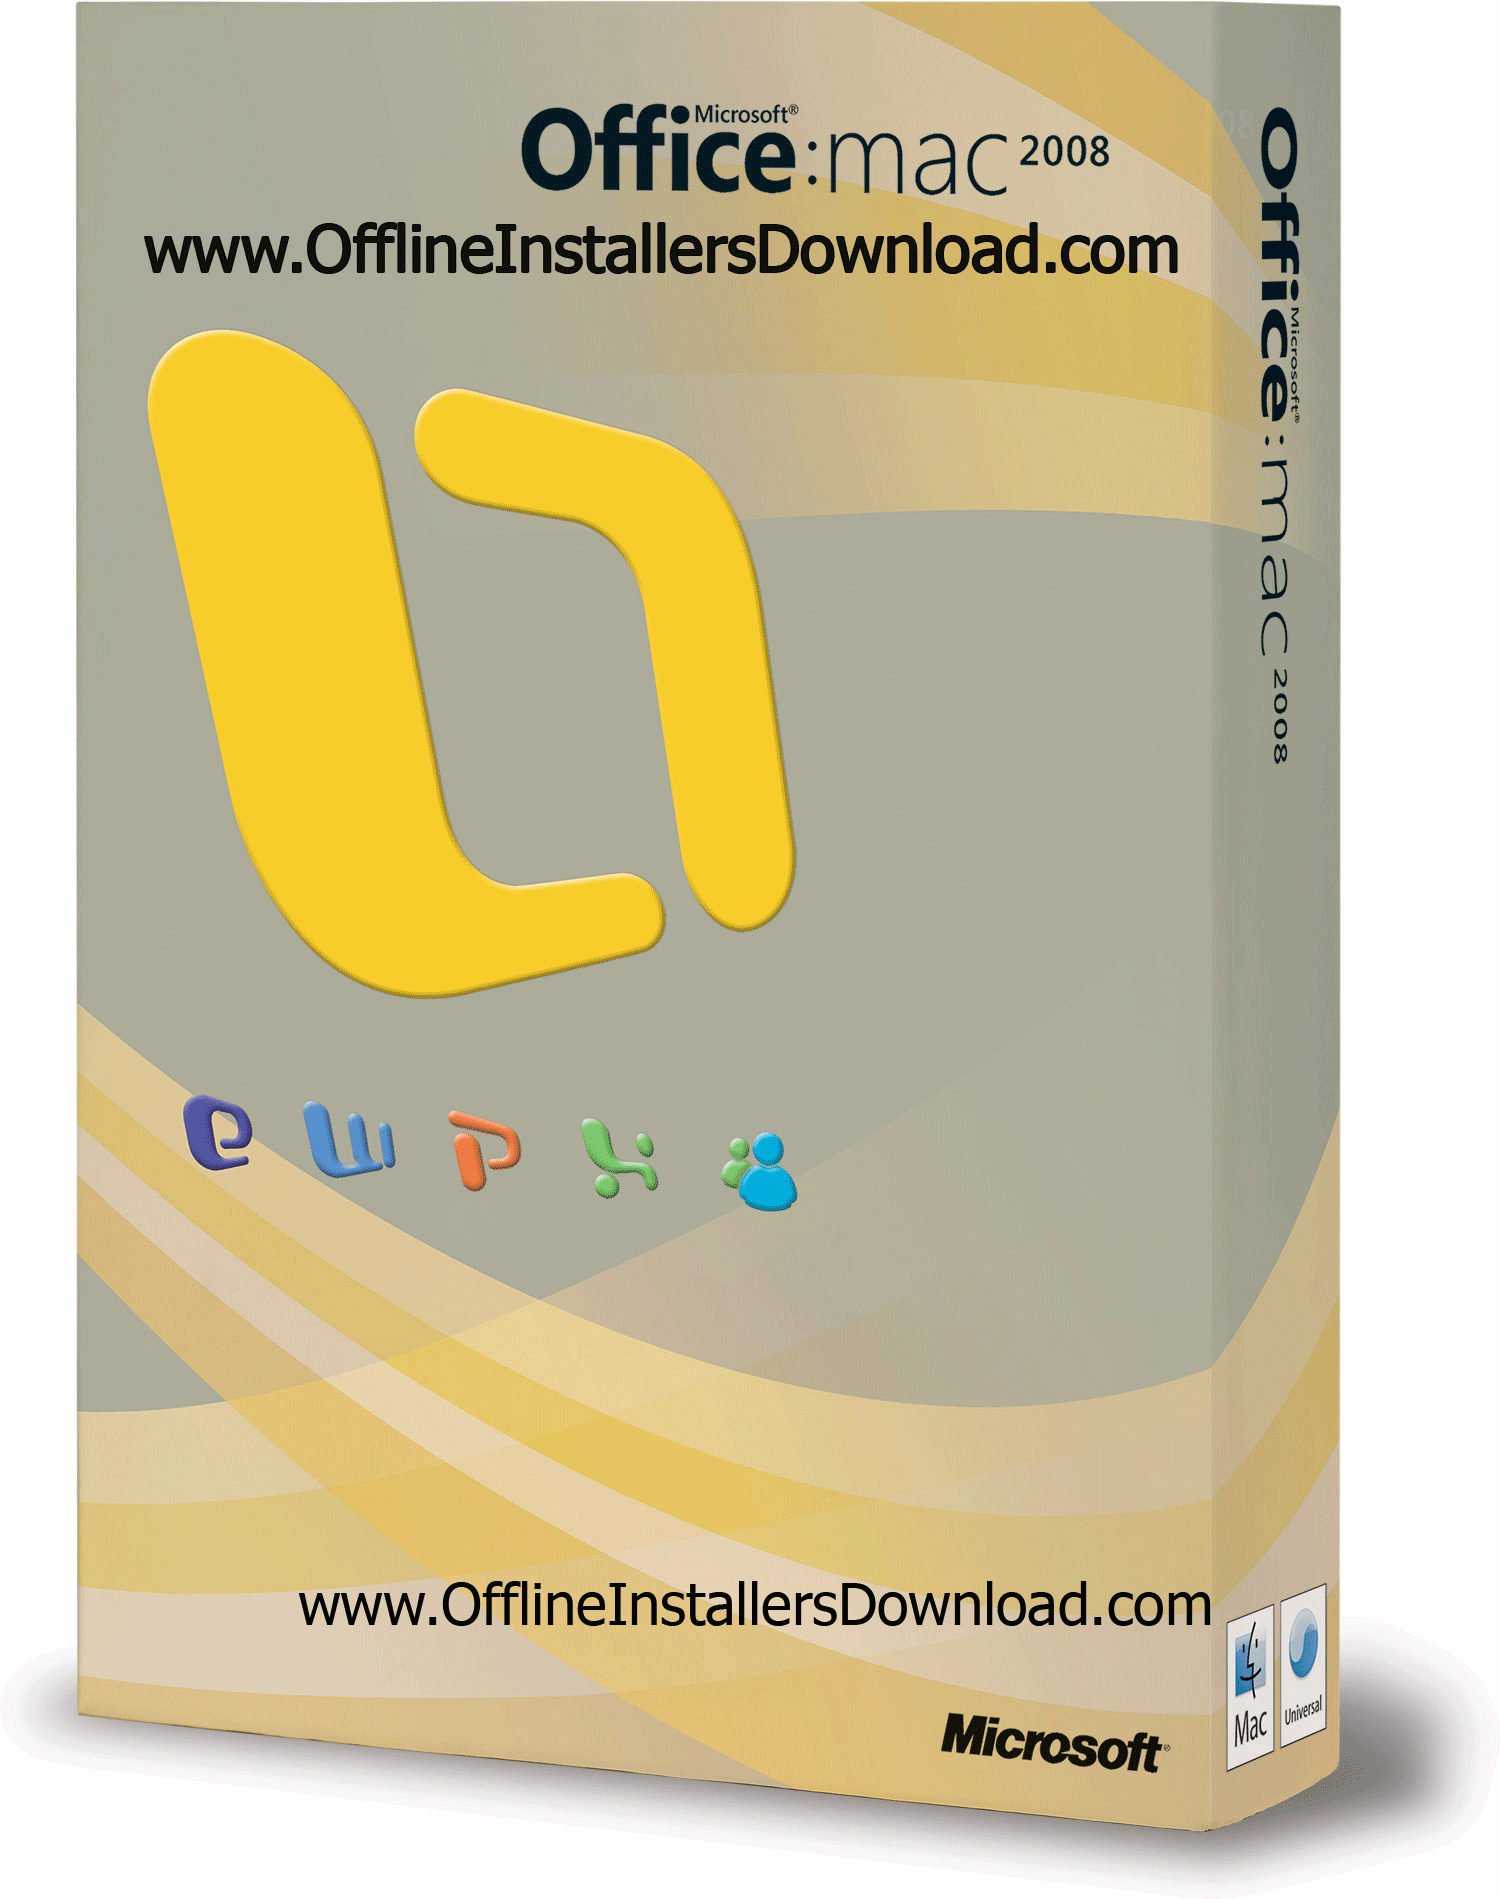 Office 2008 mac free. download full version windows 7